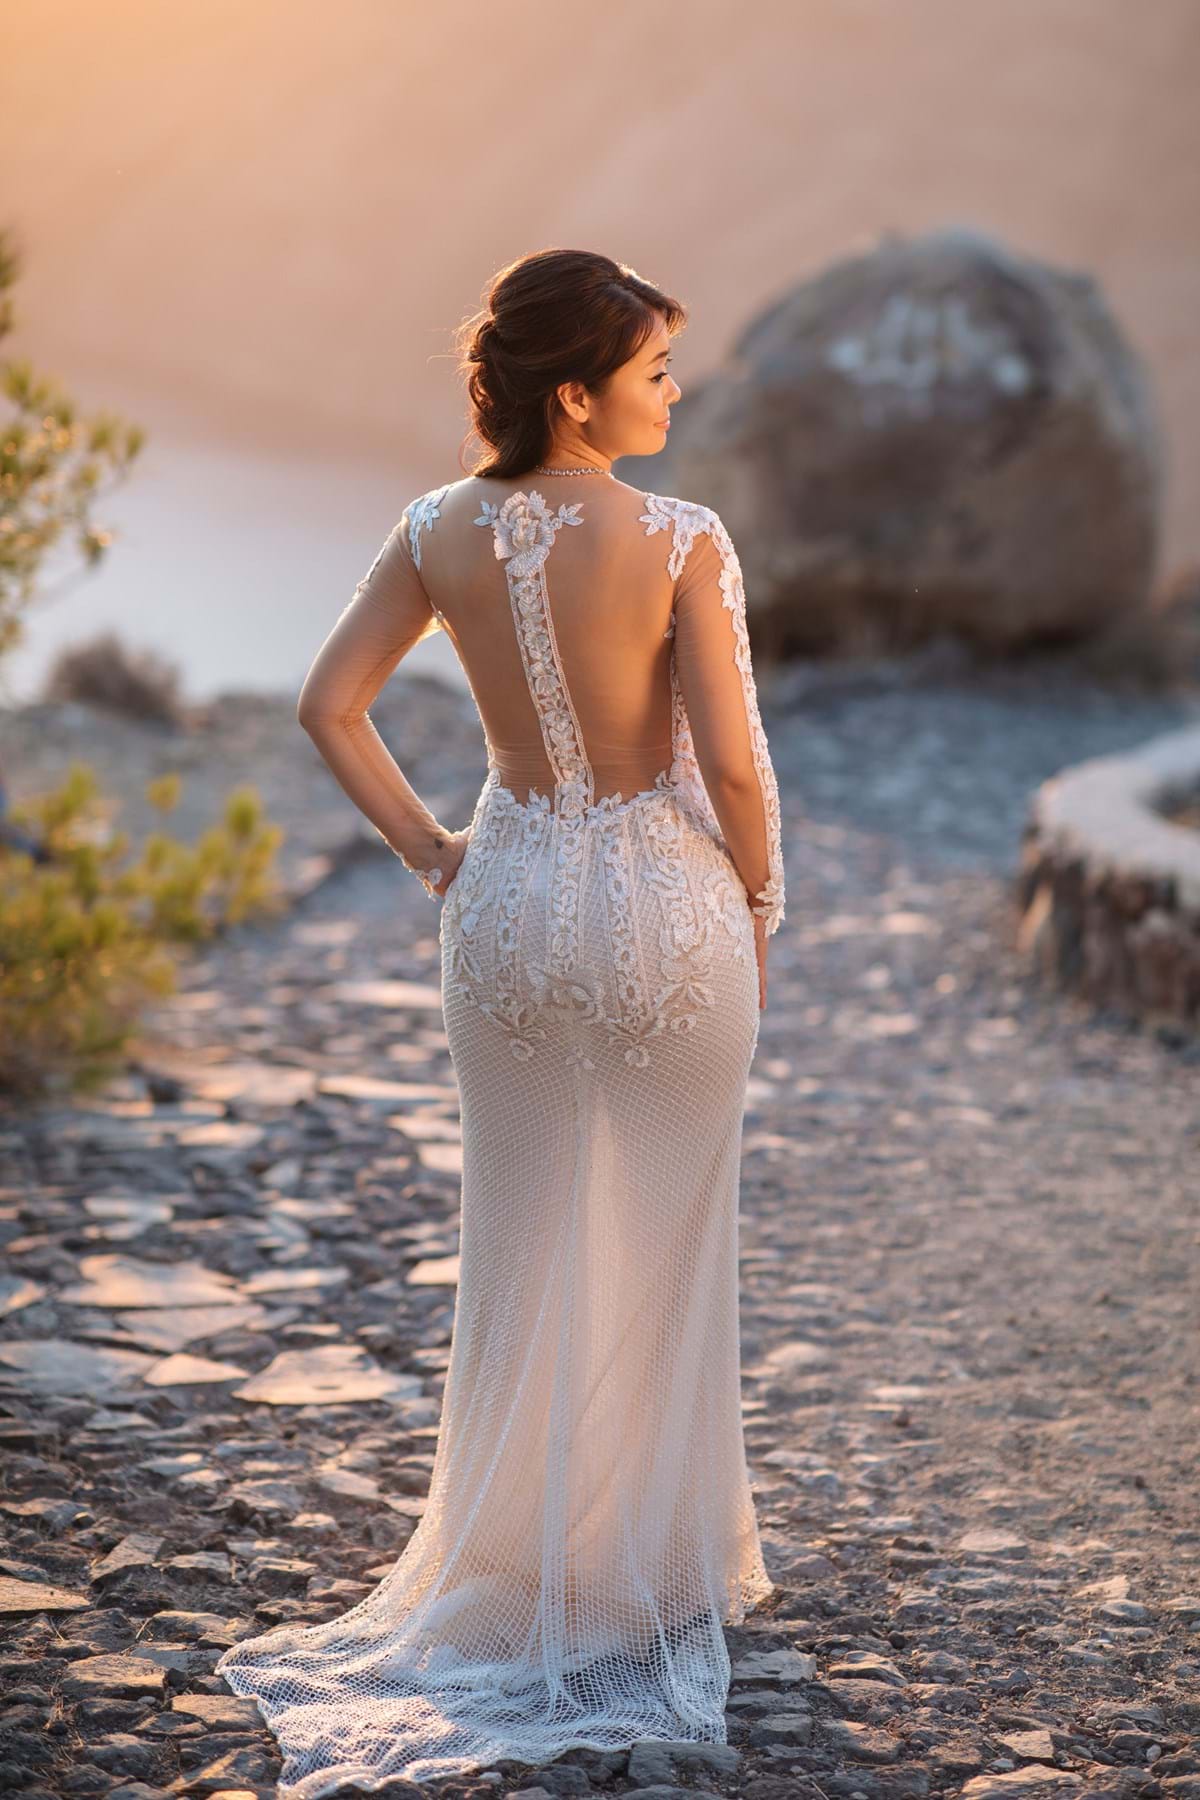 Destination Wedding Dress Inspiration for a Summer Soiree in Greece